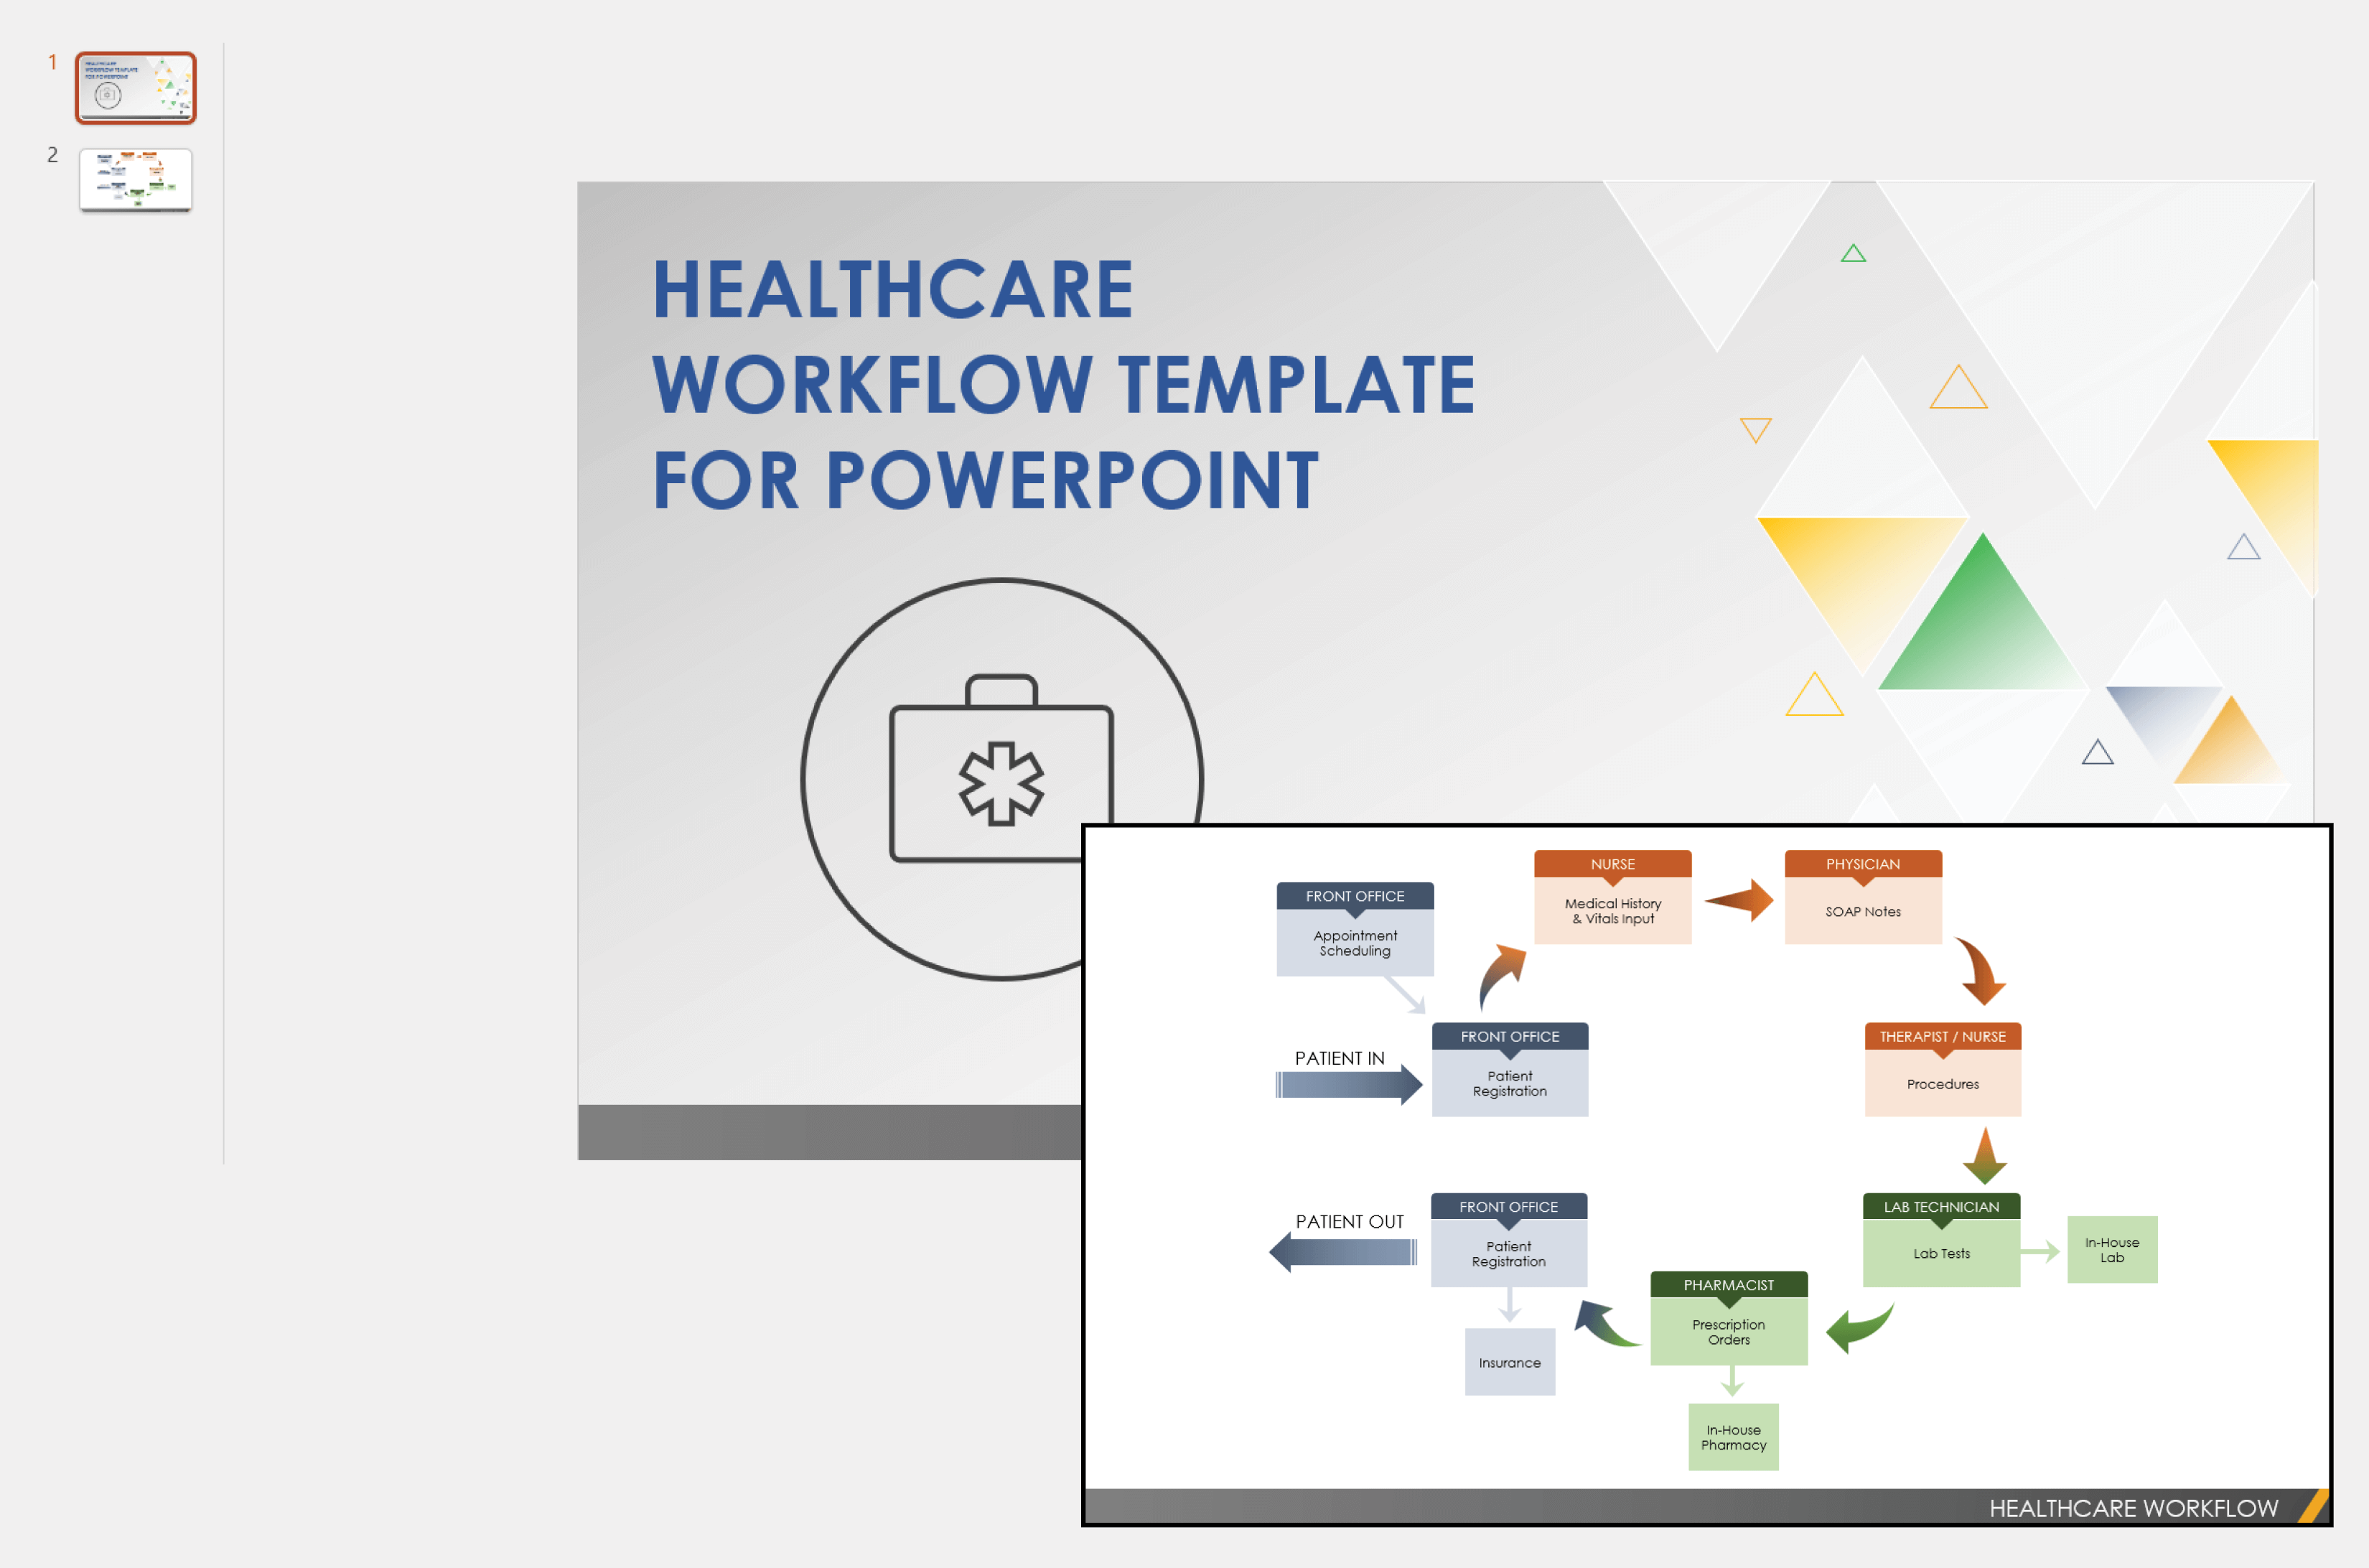 Powerpoint Workflow Template